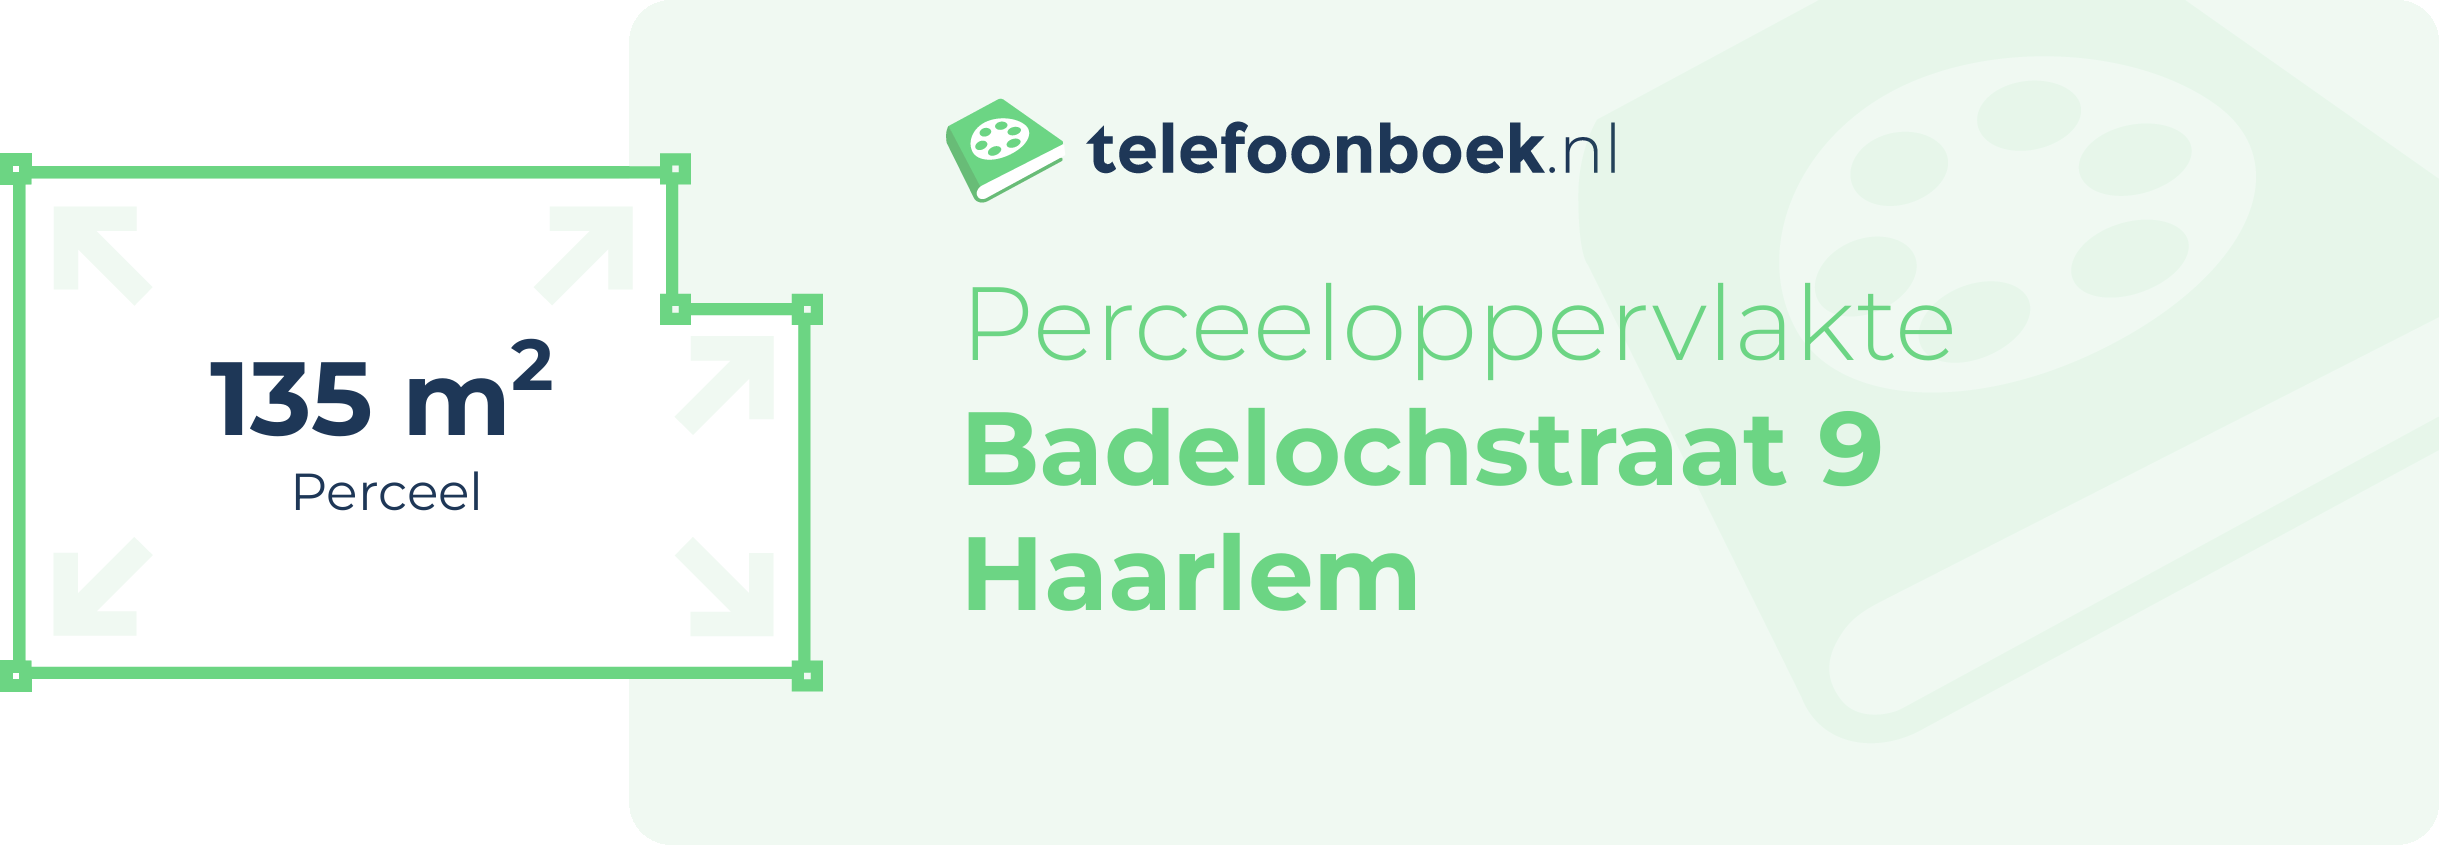 Perceeloppervlakte Badelochstraat 9 Haarlem